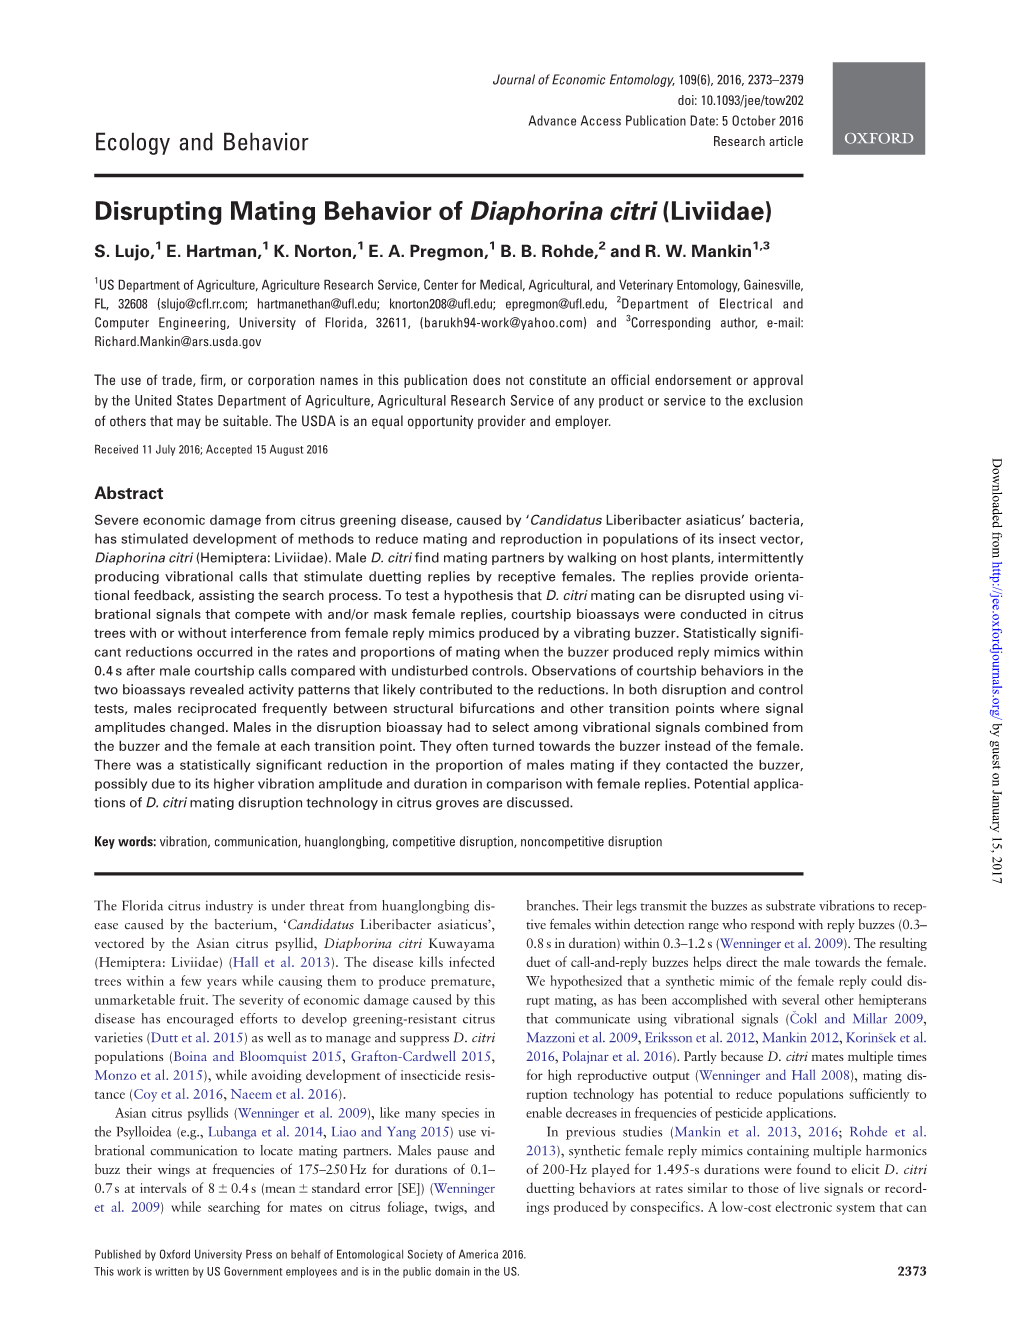 Disrupting Mating Behavior of Diaphorina Citri (Liviidae)